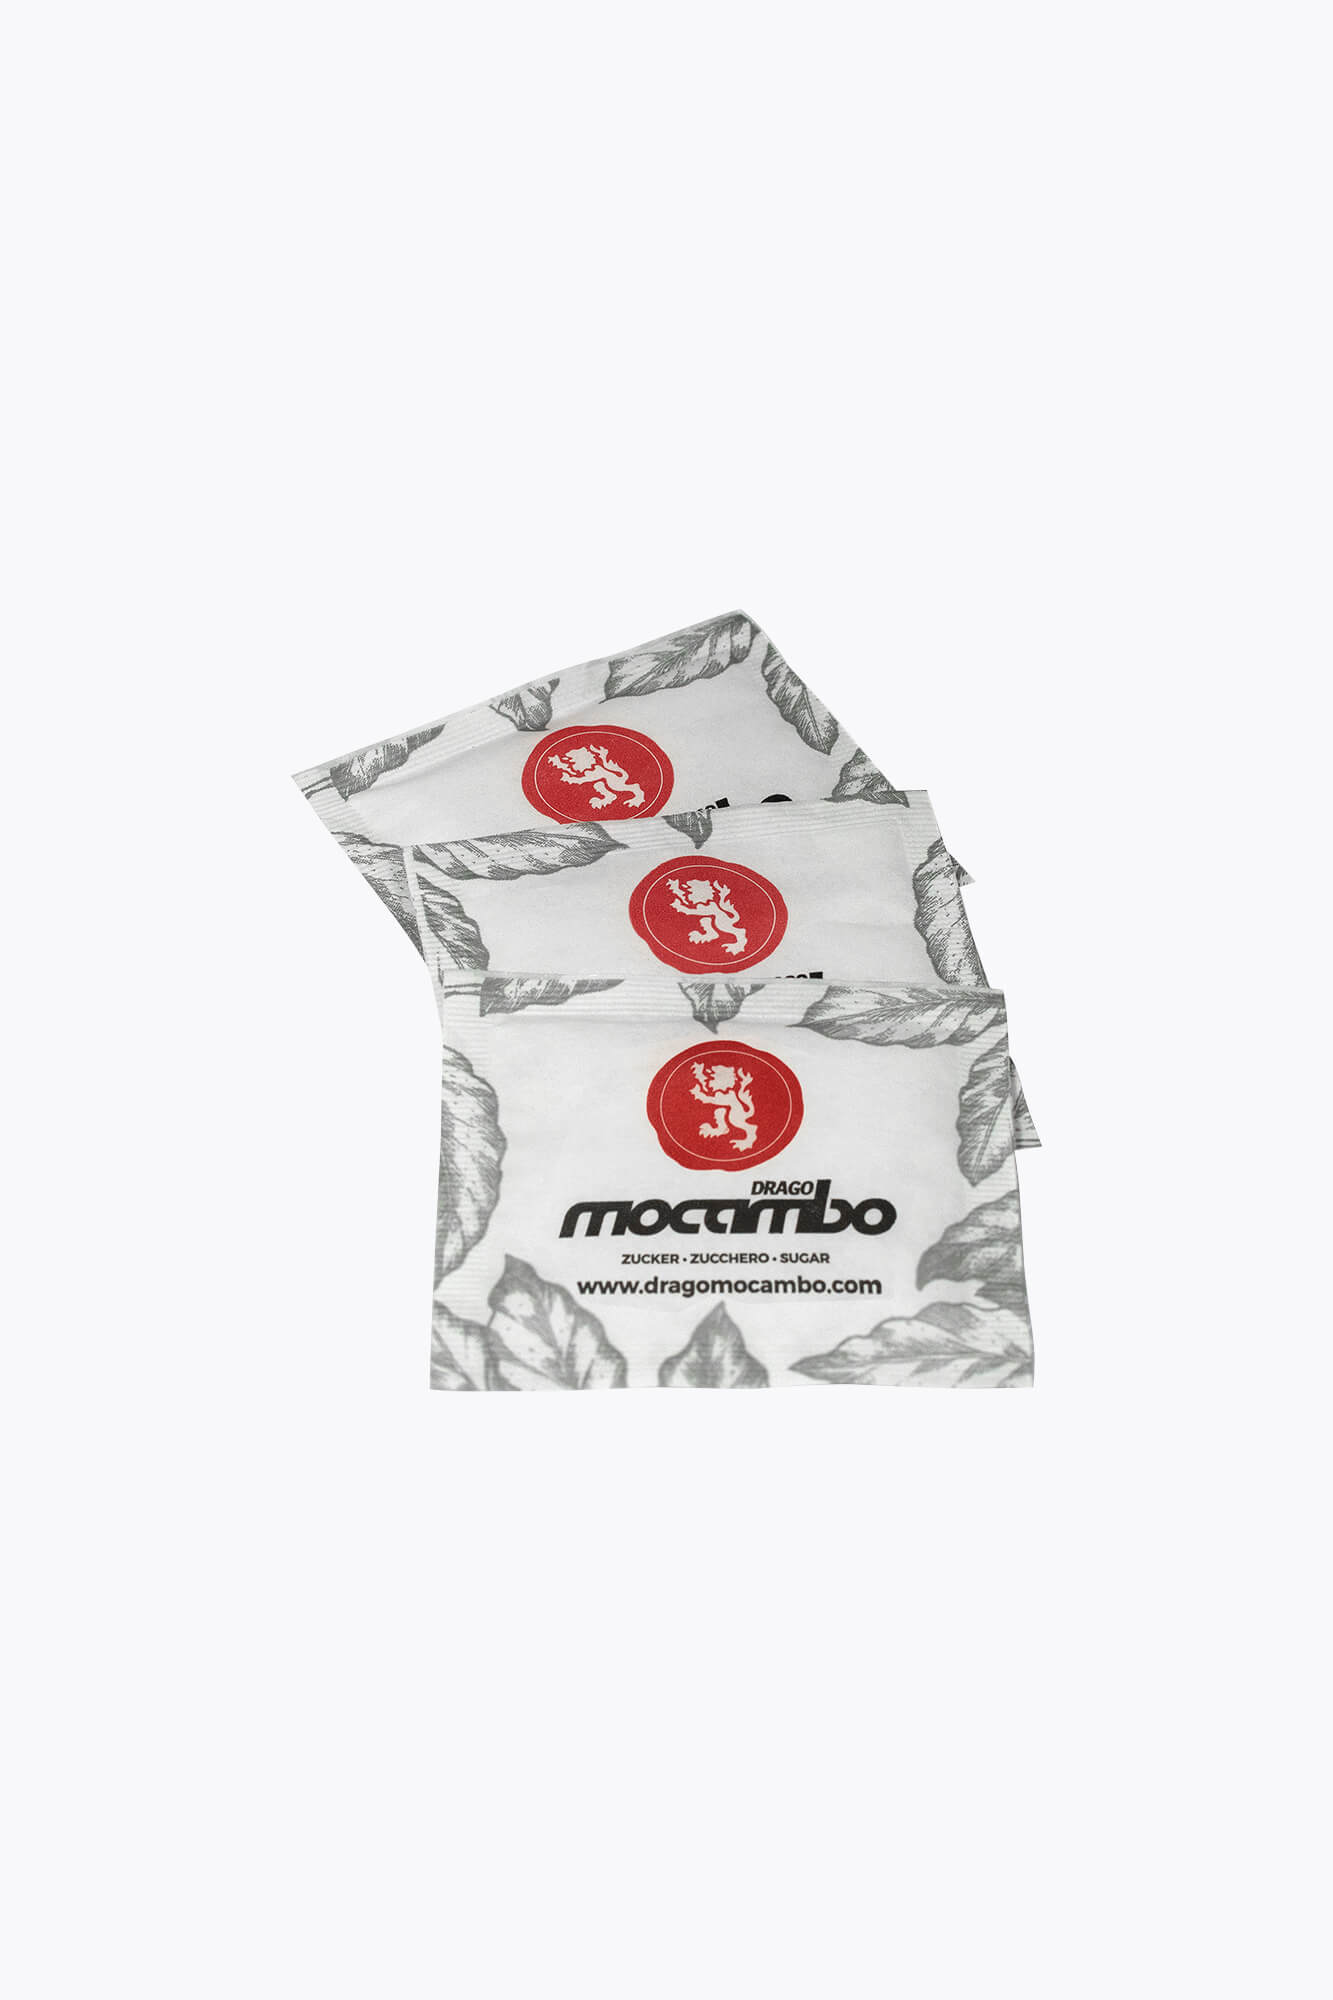 Mocambo Drago Mocambo Zucker Brief Weißzucker 1000 Stück